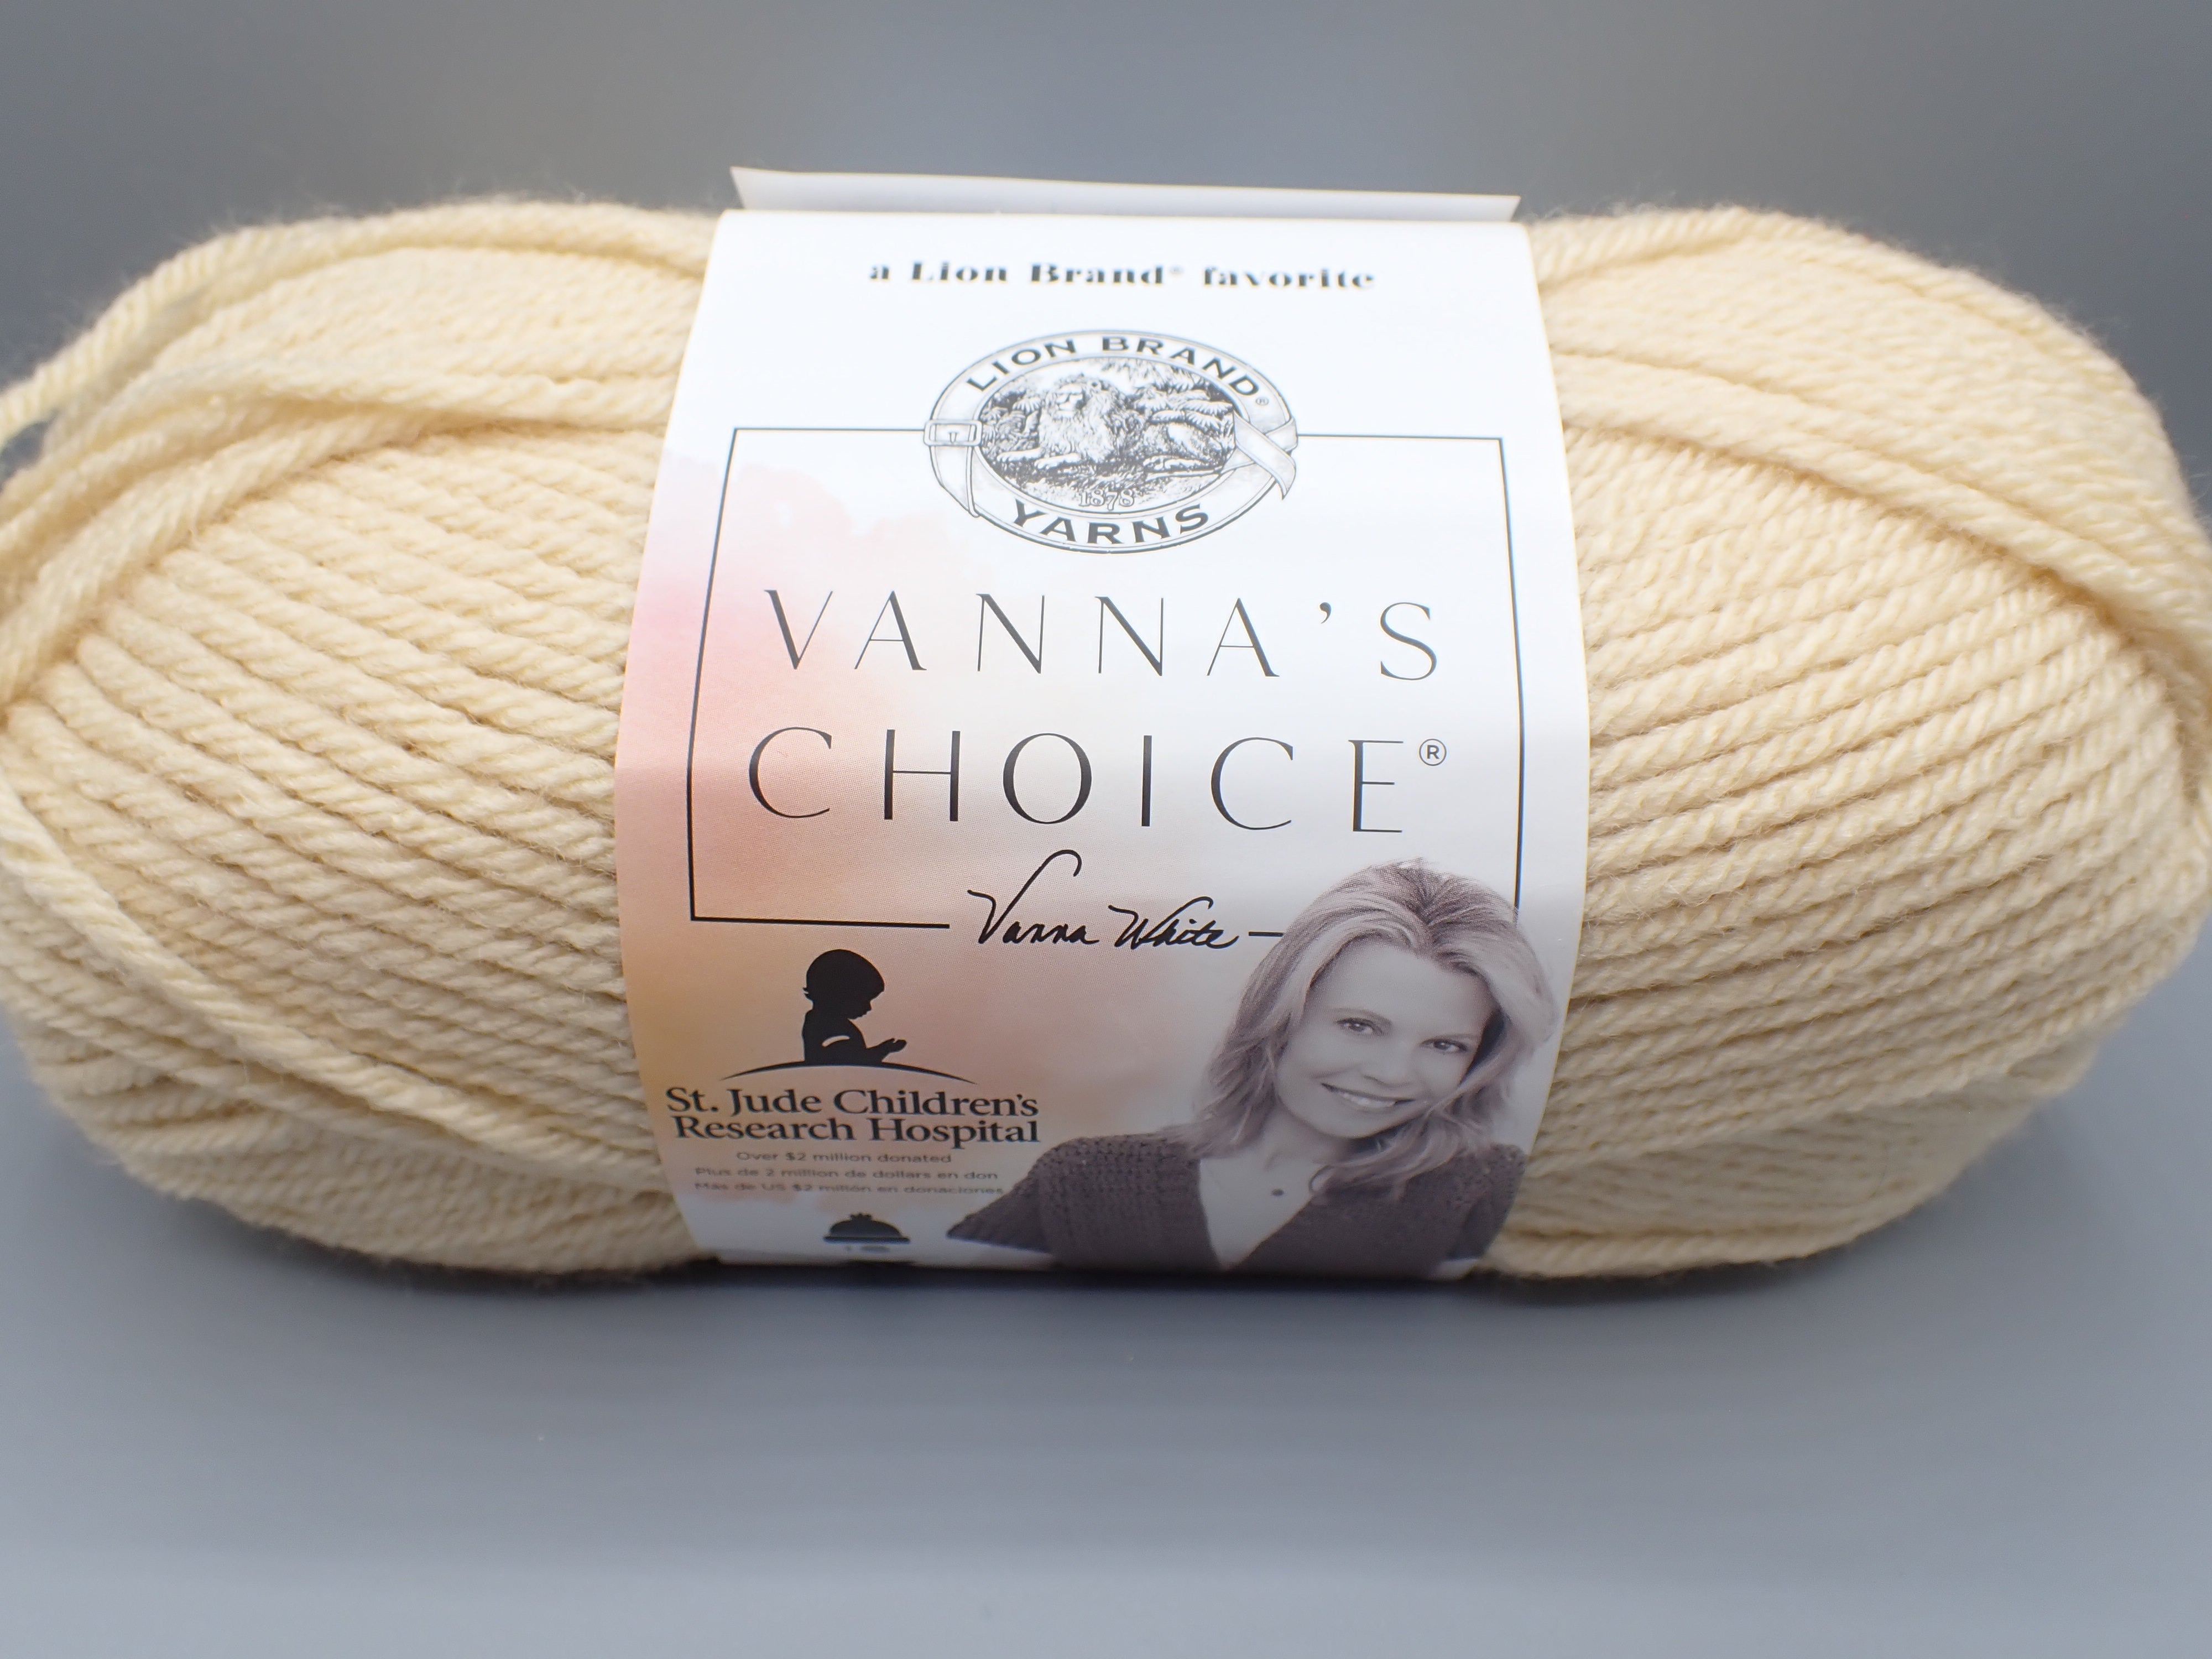 Lion Brand Vanna's Choice Yarn by Lion Brand